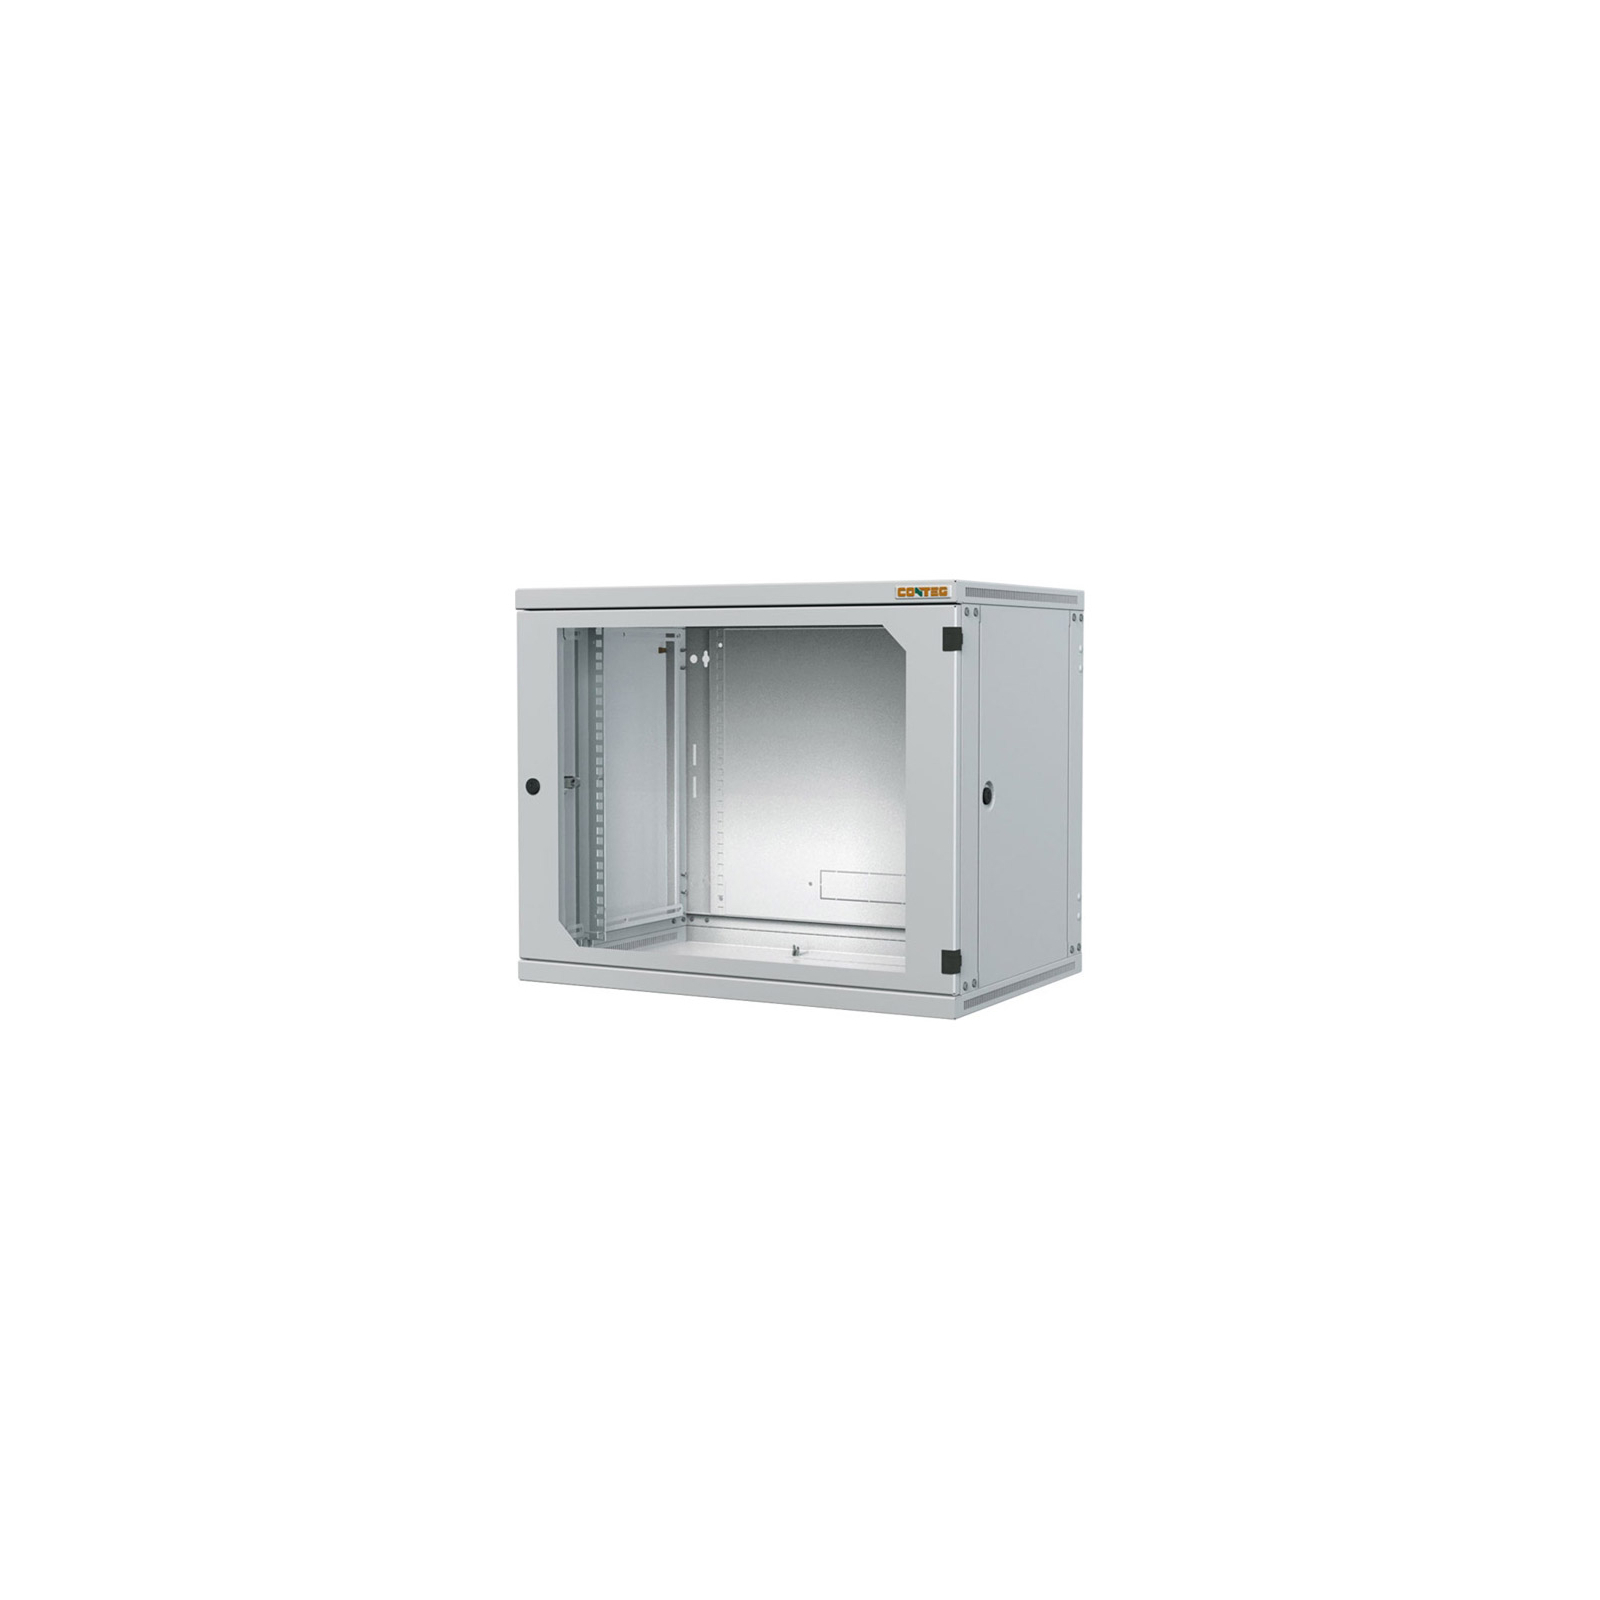 Шкаф настенный Conteg 15U 600x600 removable side panels RAL7035 (RUN-15-60/60-TH)